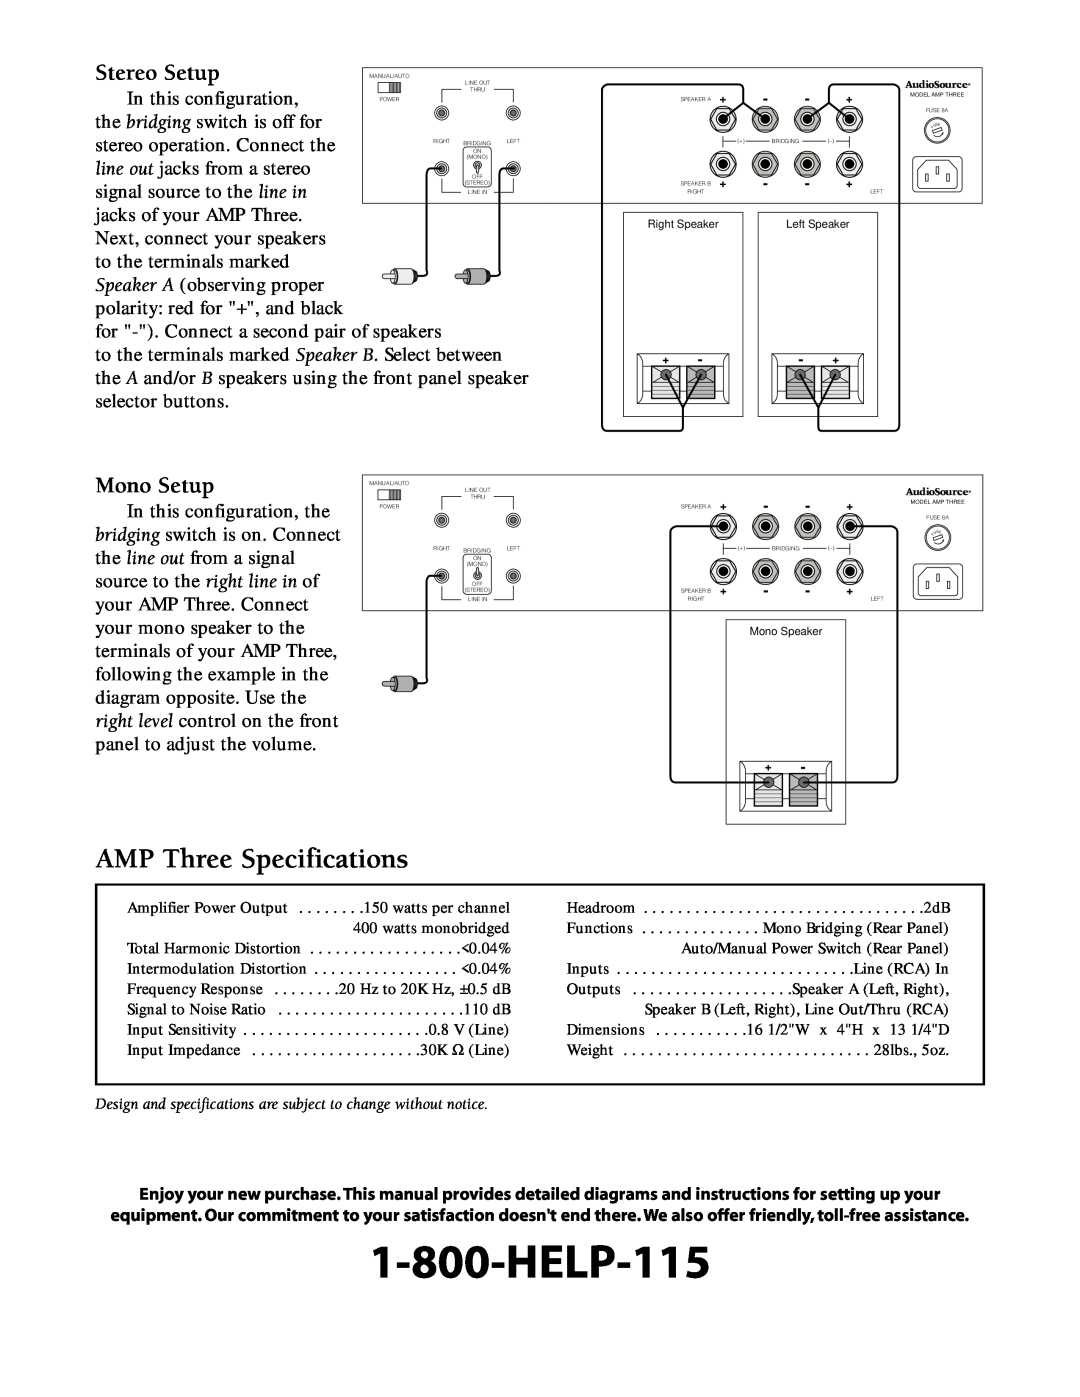 AudioSource AmpThree owner manual AMP Three Specifications, Stereo Setup, Mono Setup 